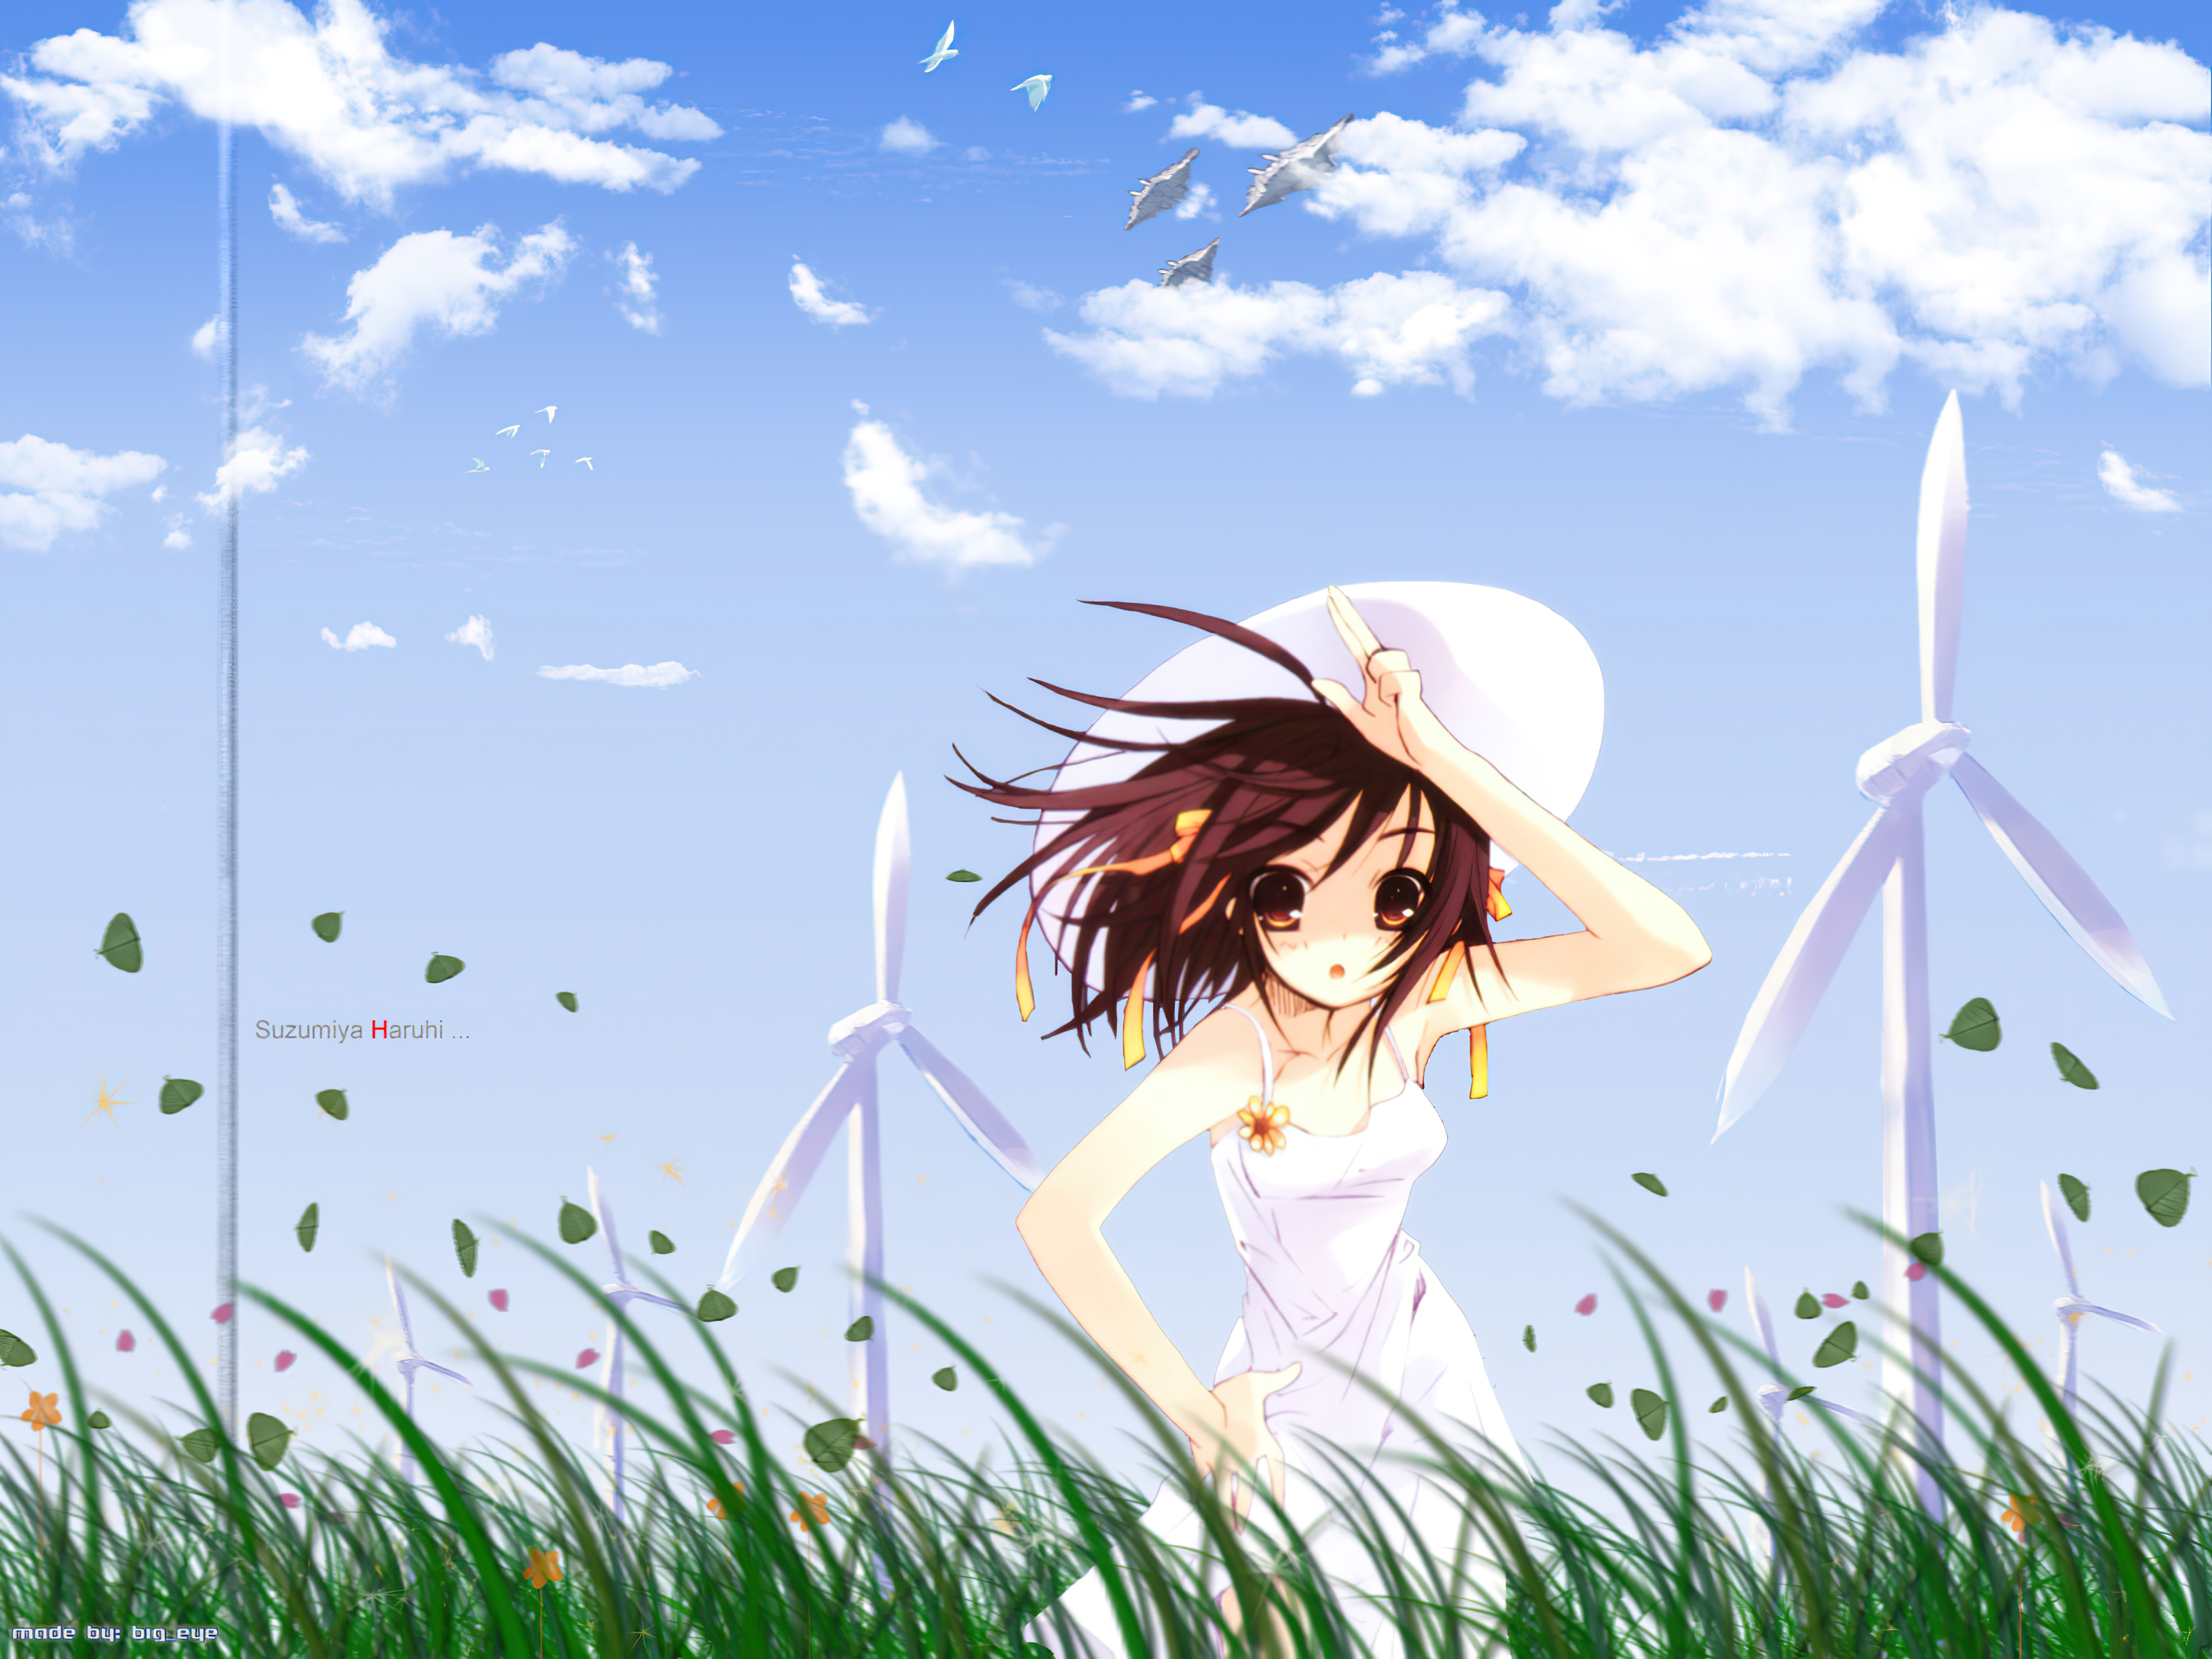 Baixe gratuitamente a imagem Suzumiya Haruhi No Yûutsu, Haruhi Suzumiya, Anime na área de trabalho do seu PC